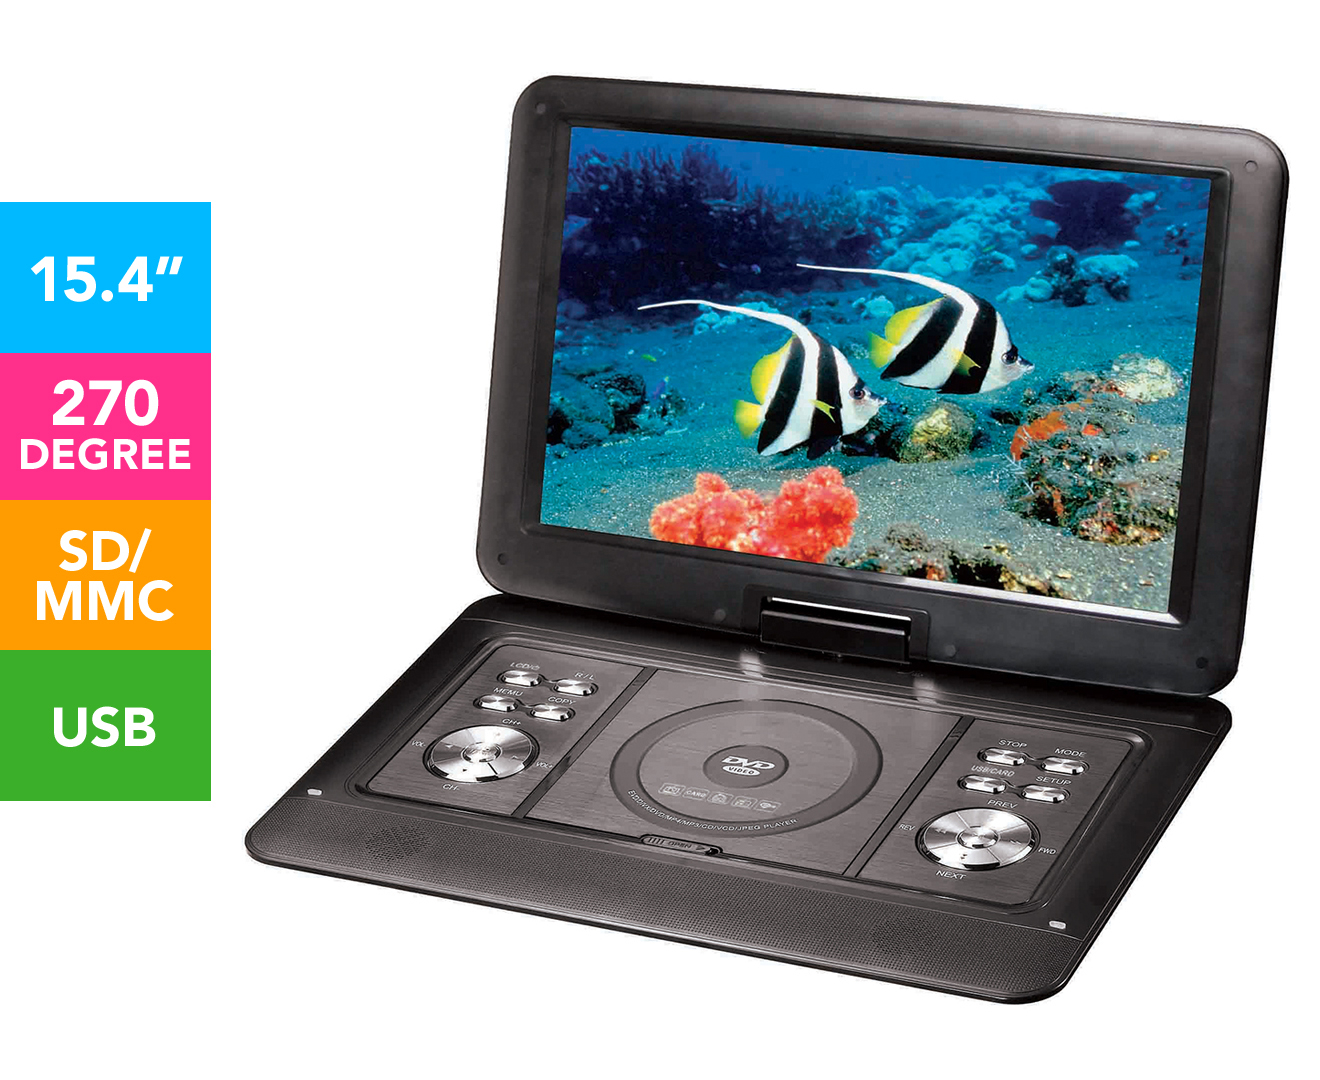 LENOXX 15.4-Inch Swivel Portable DVD Player | Catch.com.au